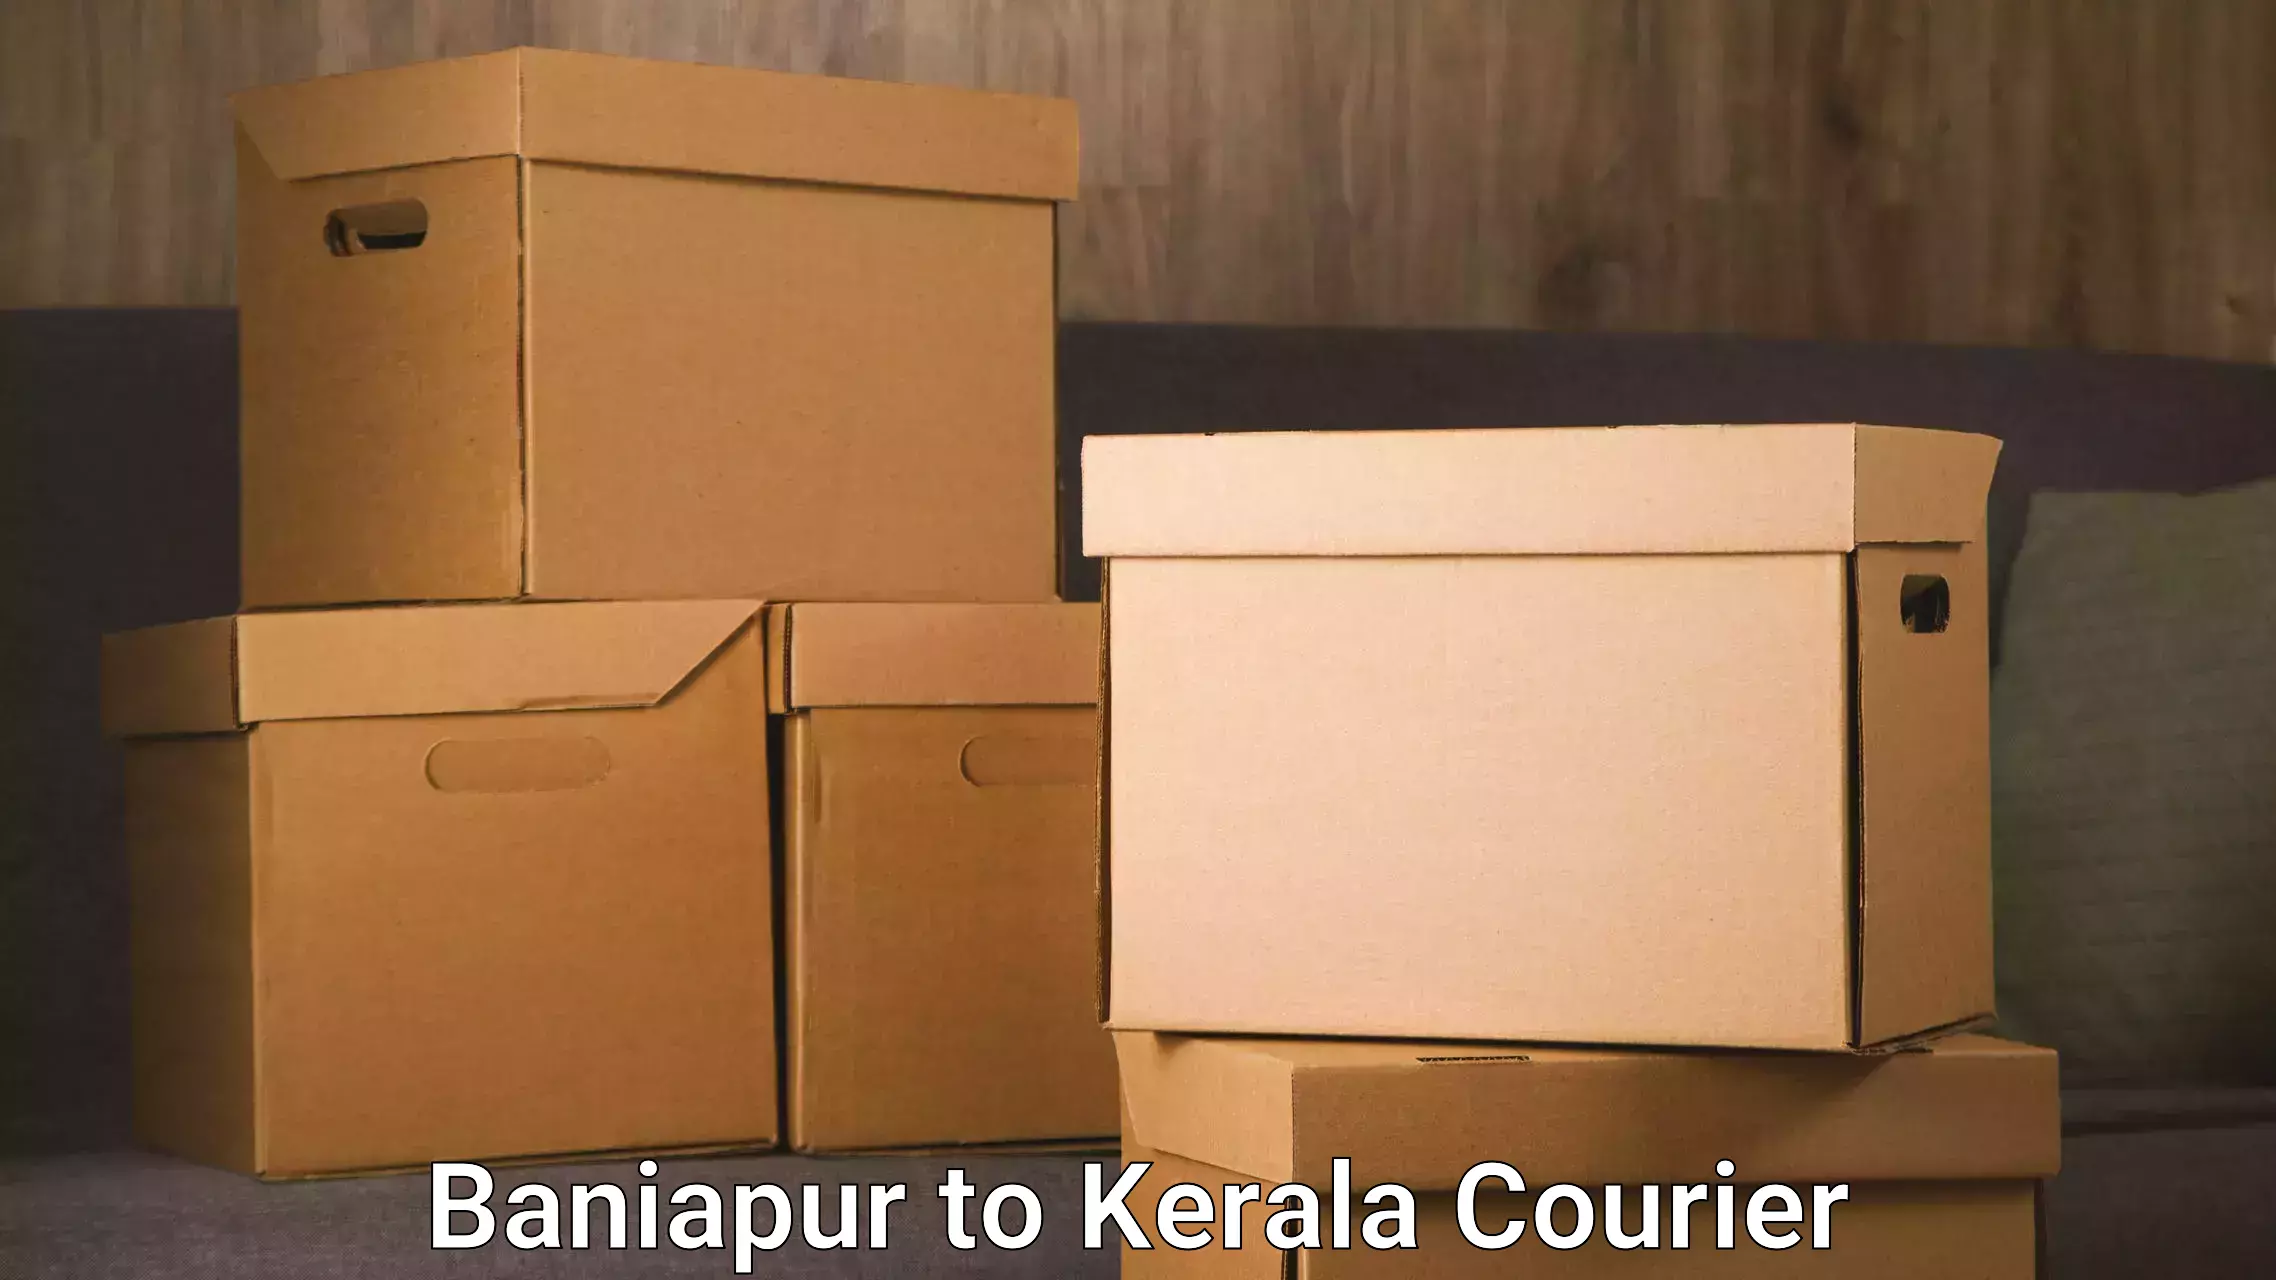 Professional moving company Baniapur to Kerala